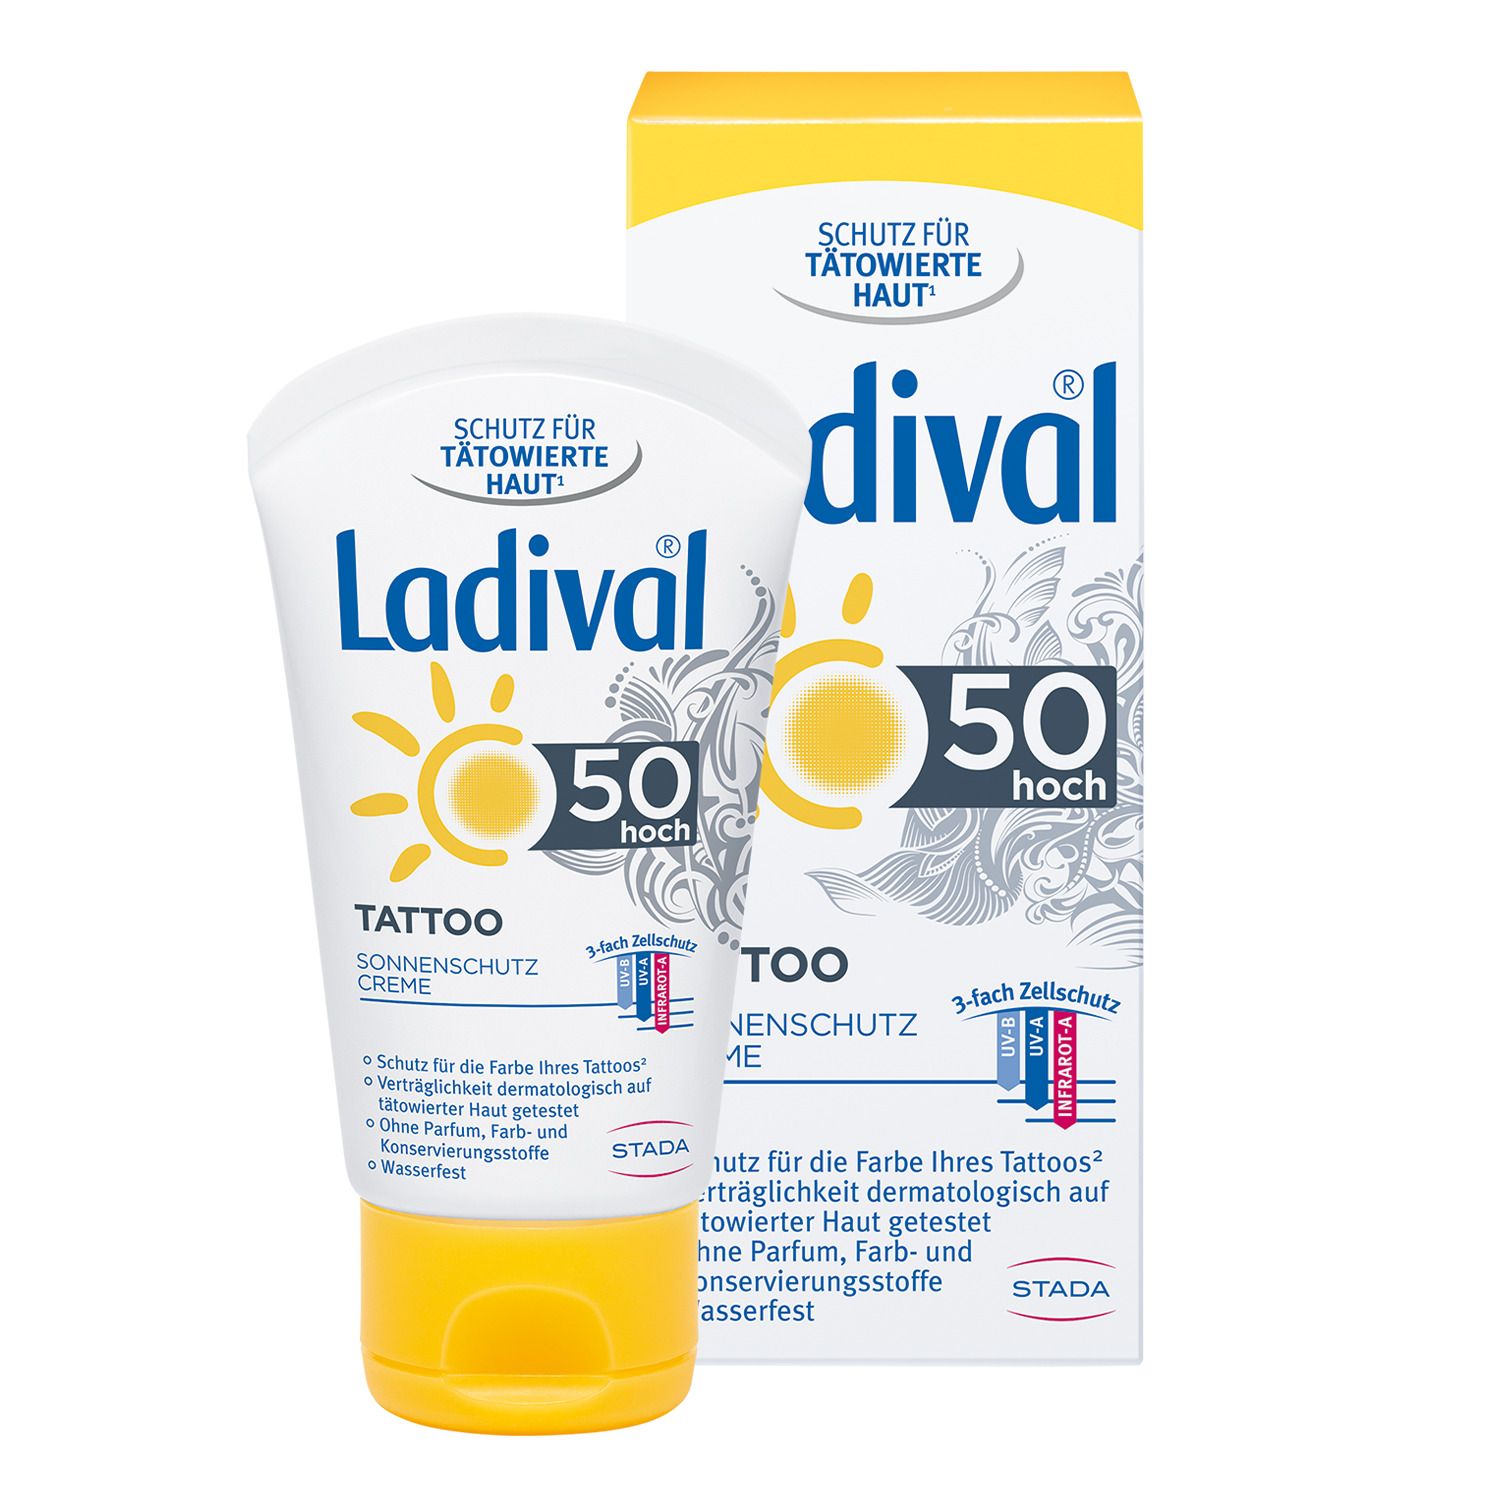 Ladival® Tattoo Sonnenschutz Lotion SPF 50